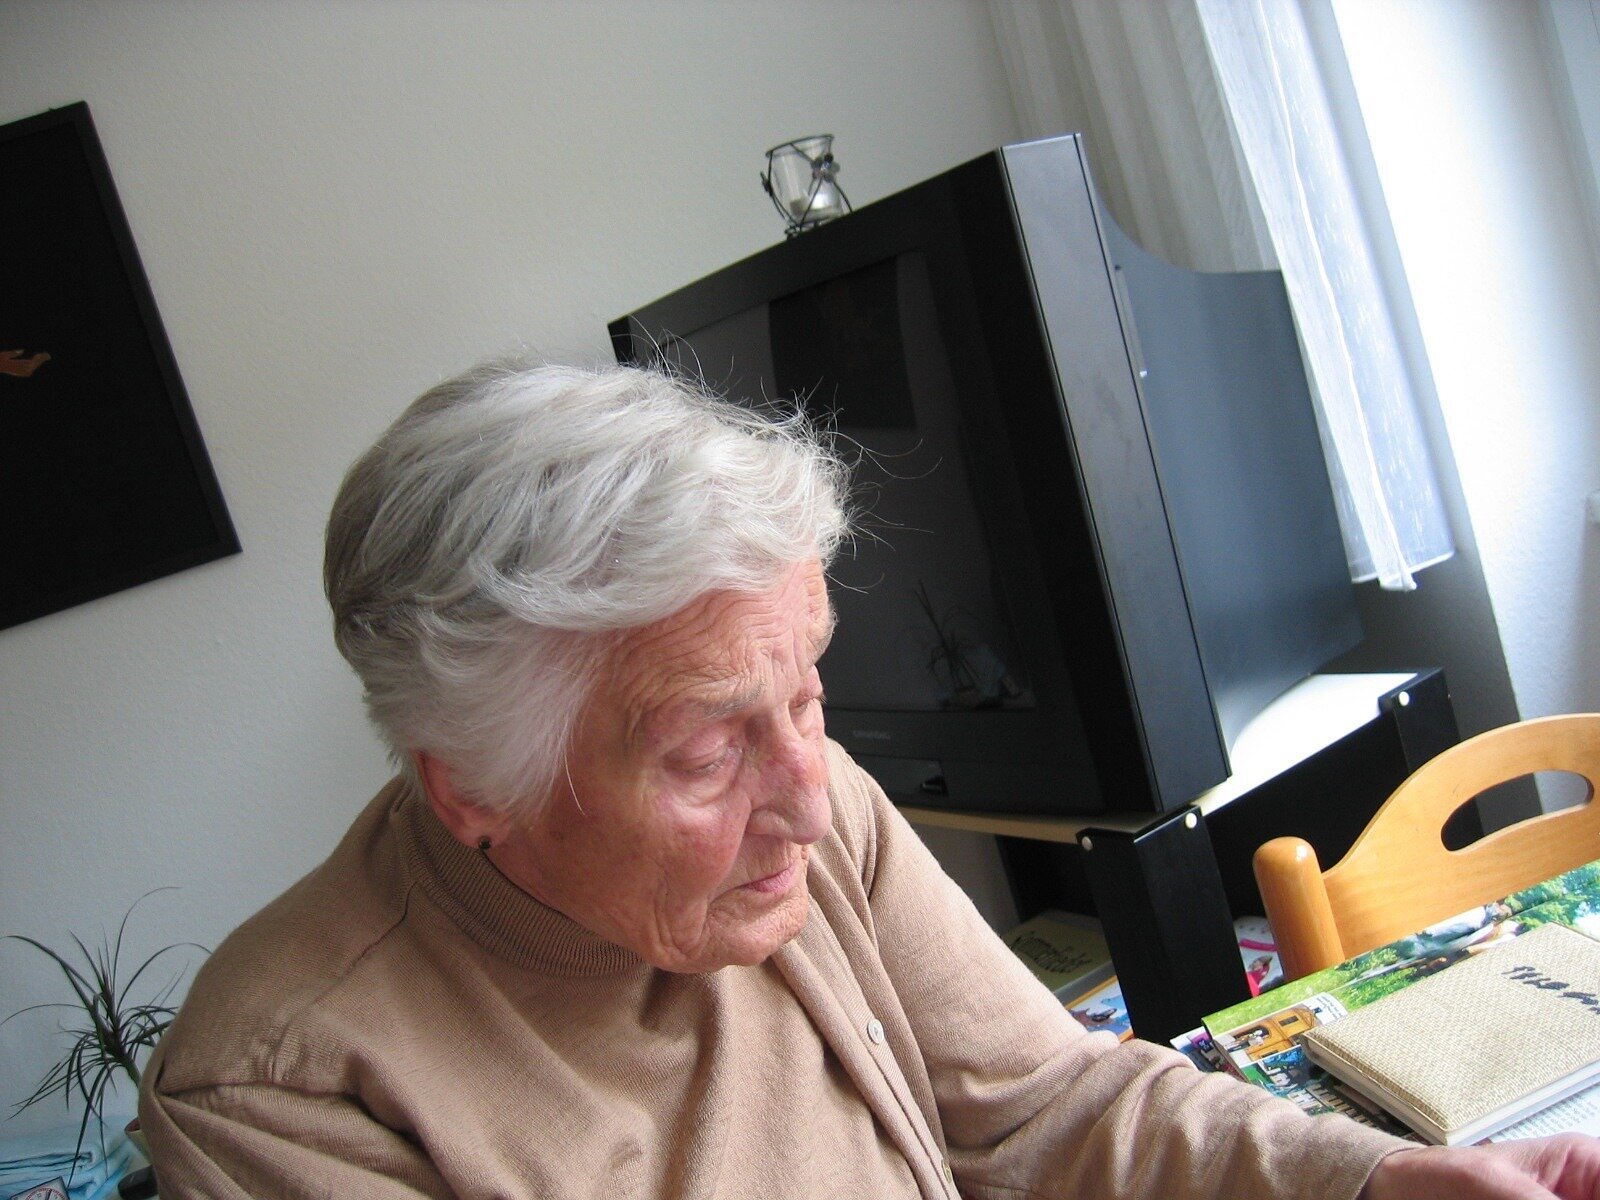 Active social lives can help dementia patients caregivers thrive